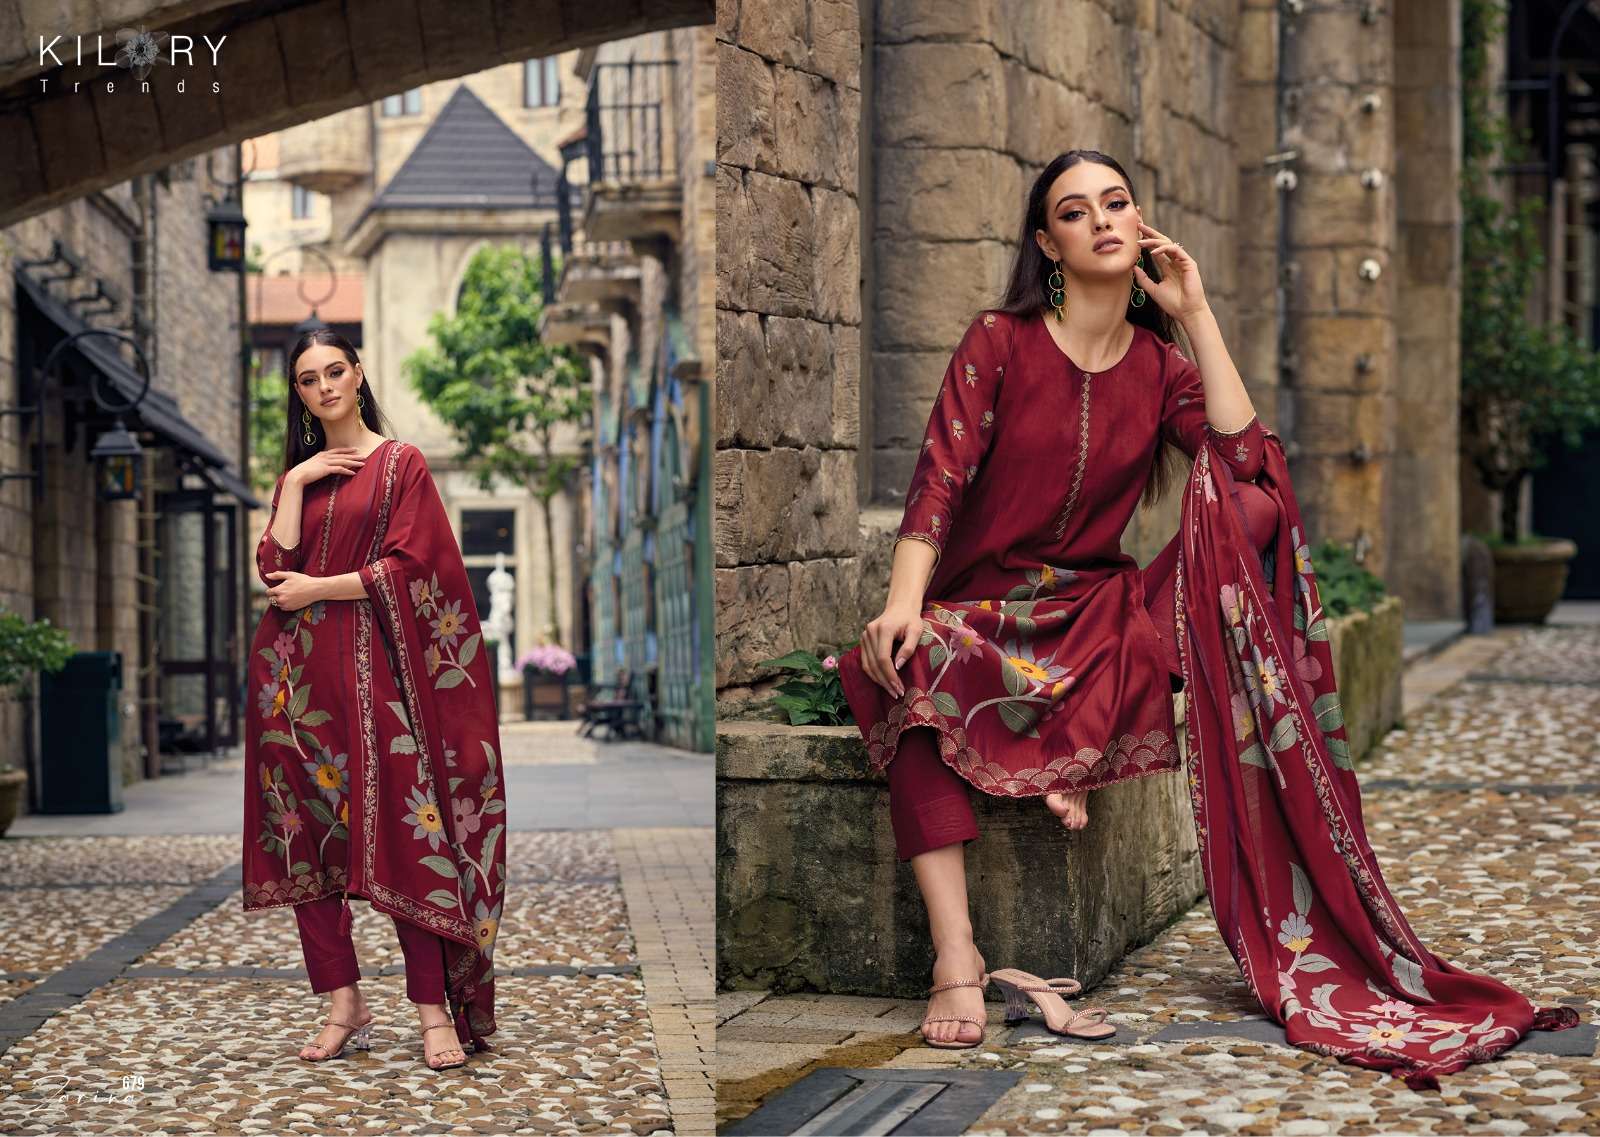 Zarina Buy Kilory Trendz Online Wholesaler Latest Collection Unstitched Salwar Suit